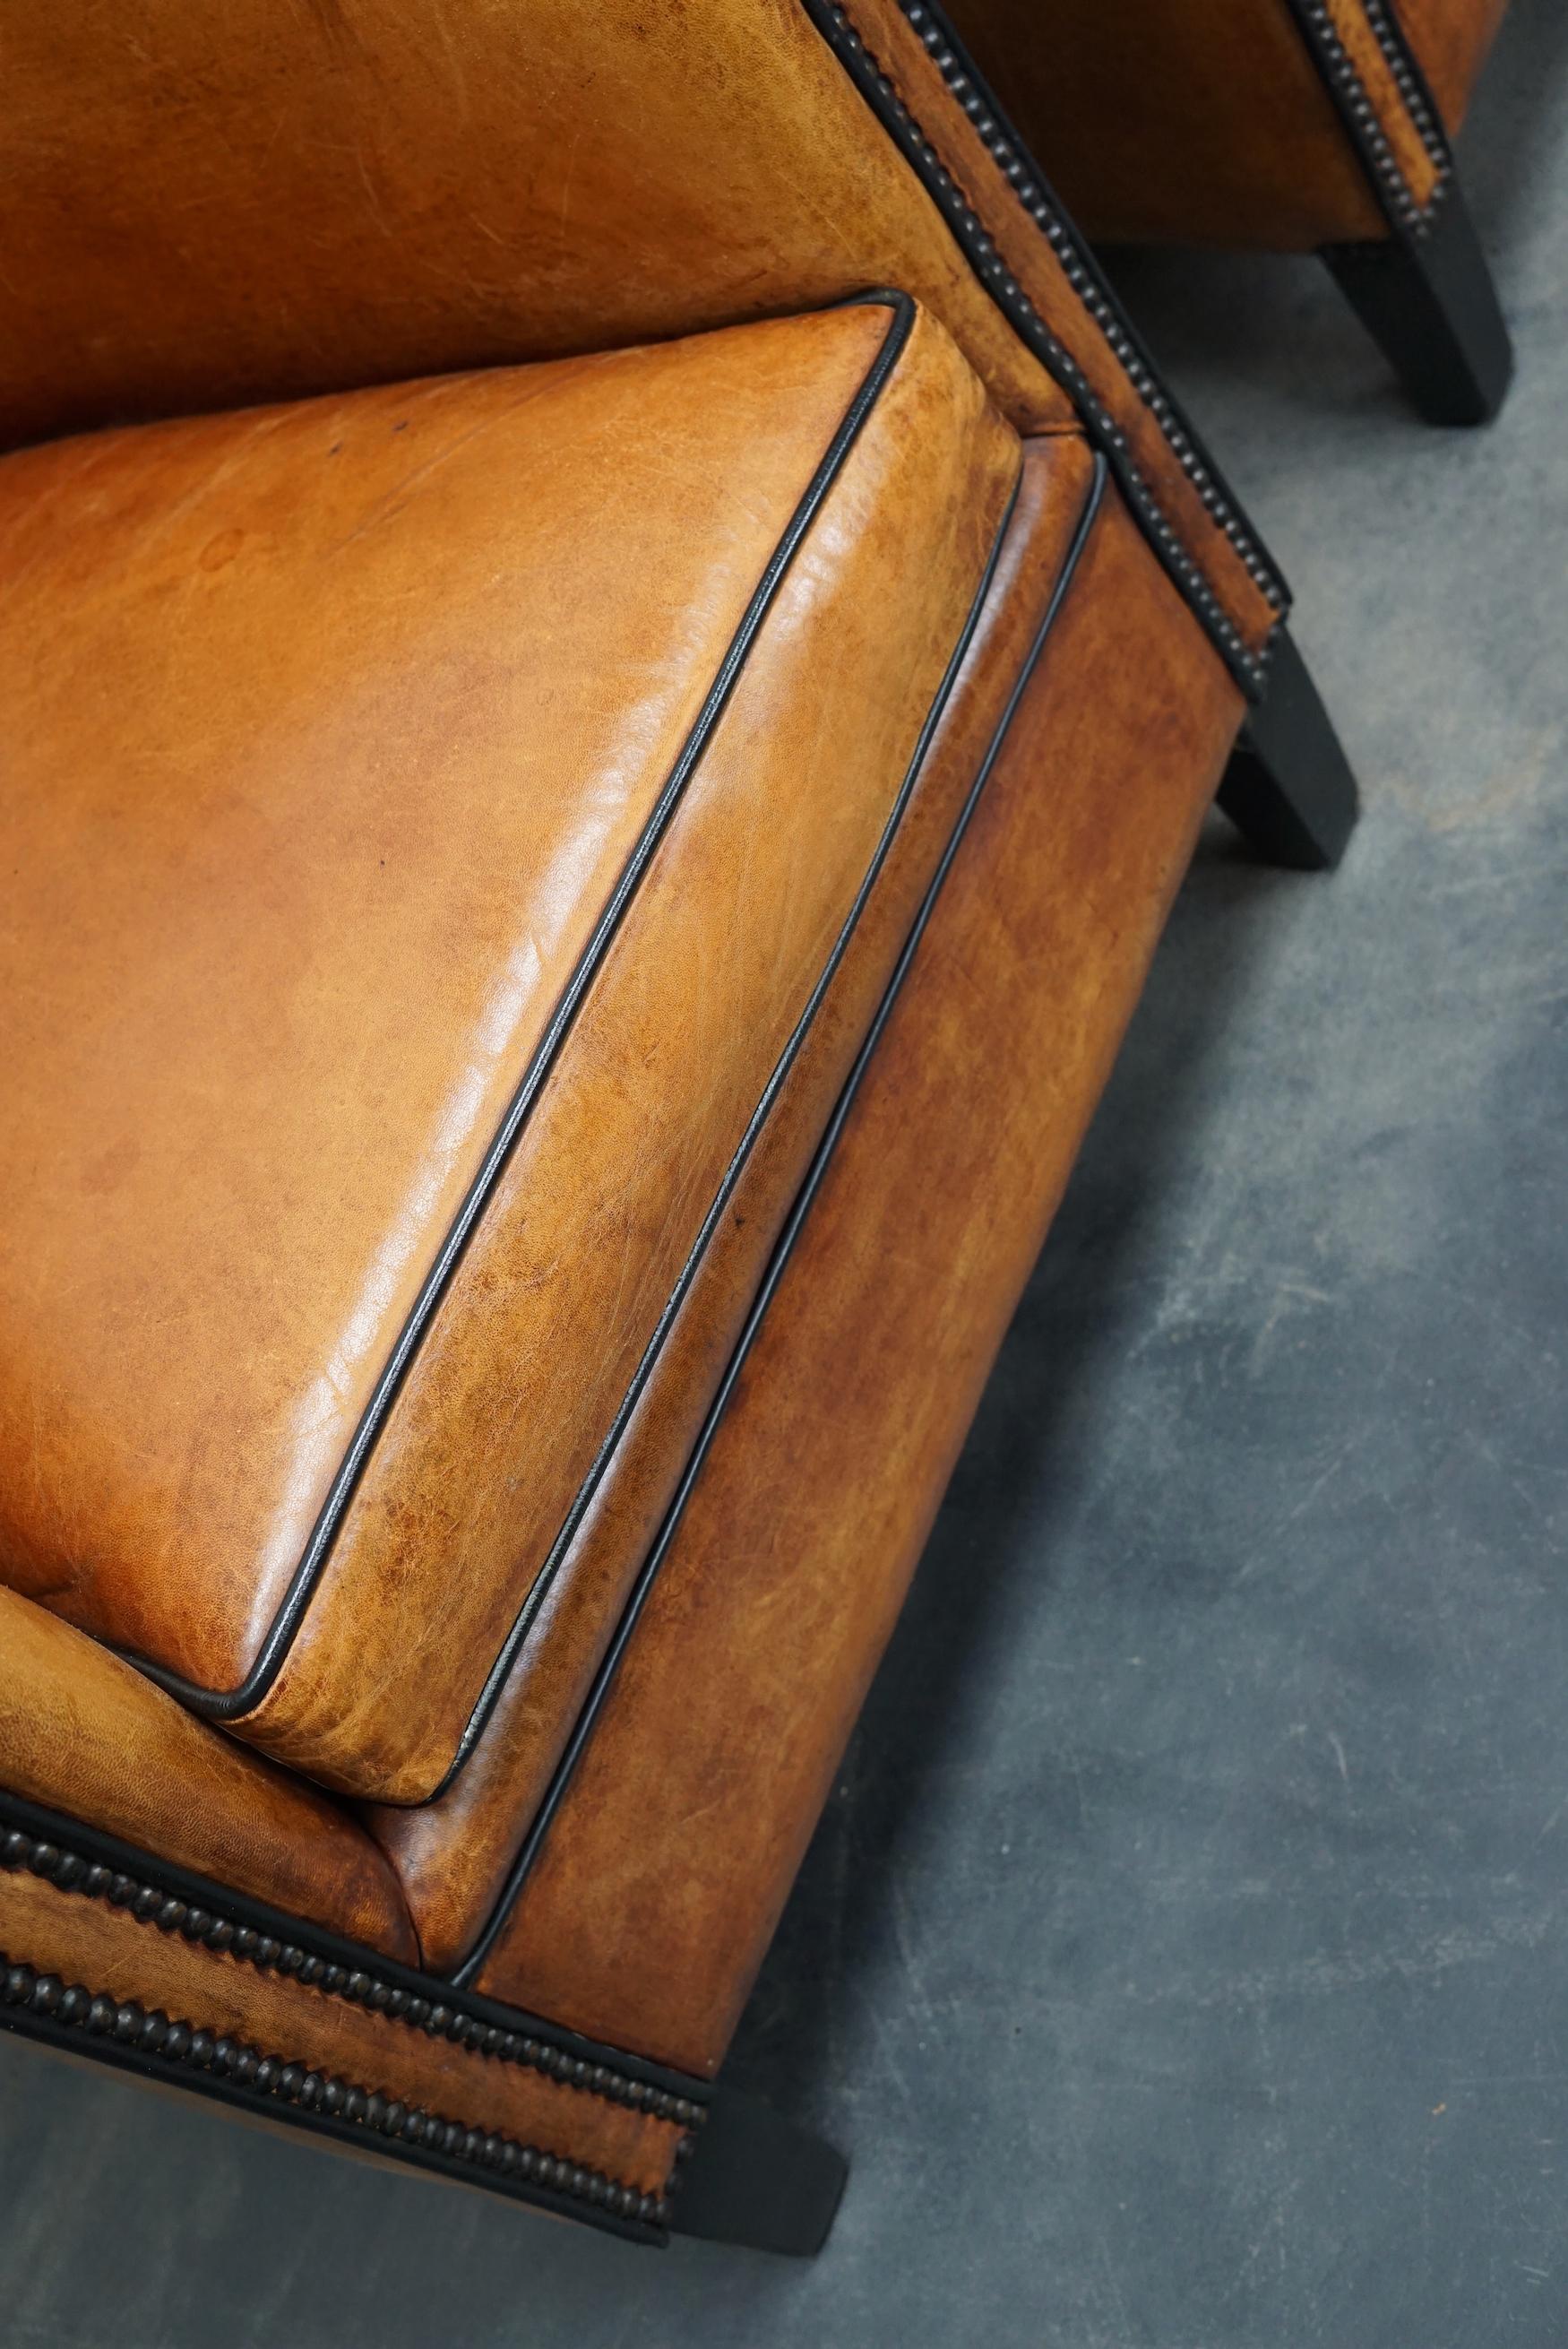 Vintage Dutch Cognac Leather Club Chairs, Set of 2 12